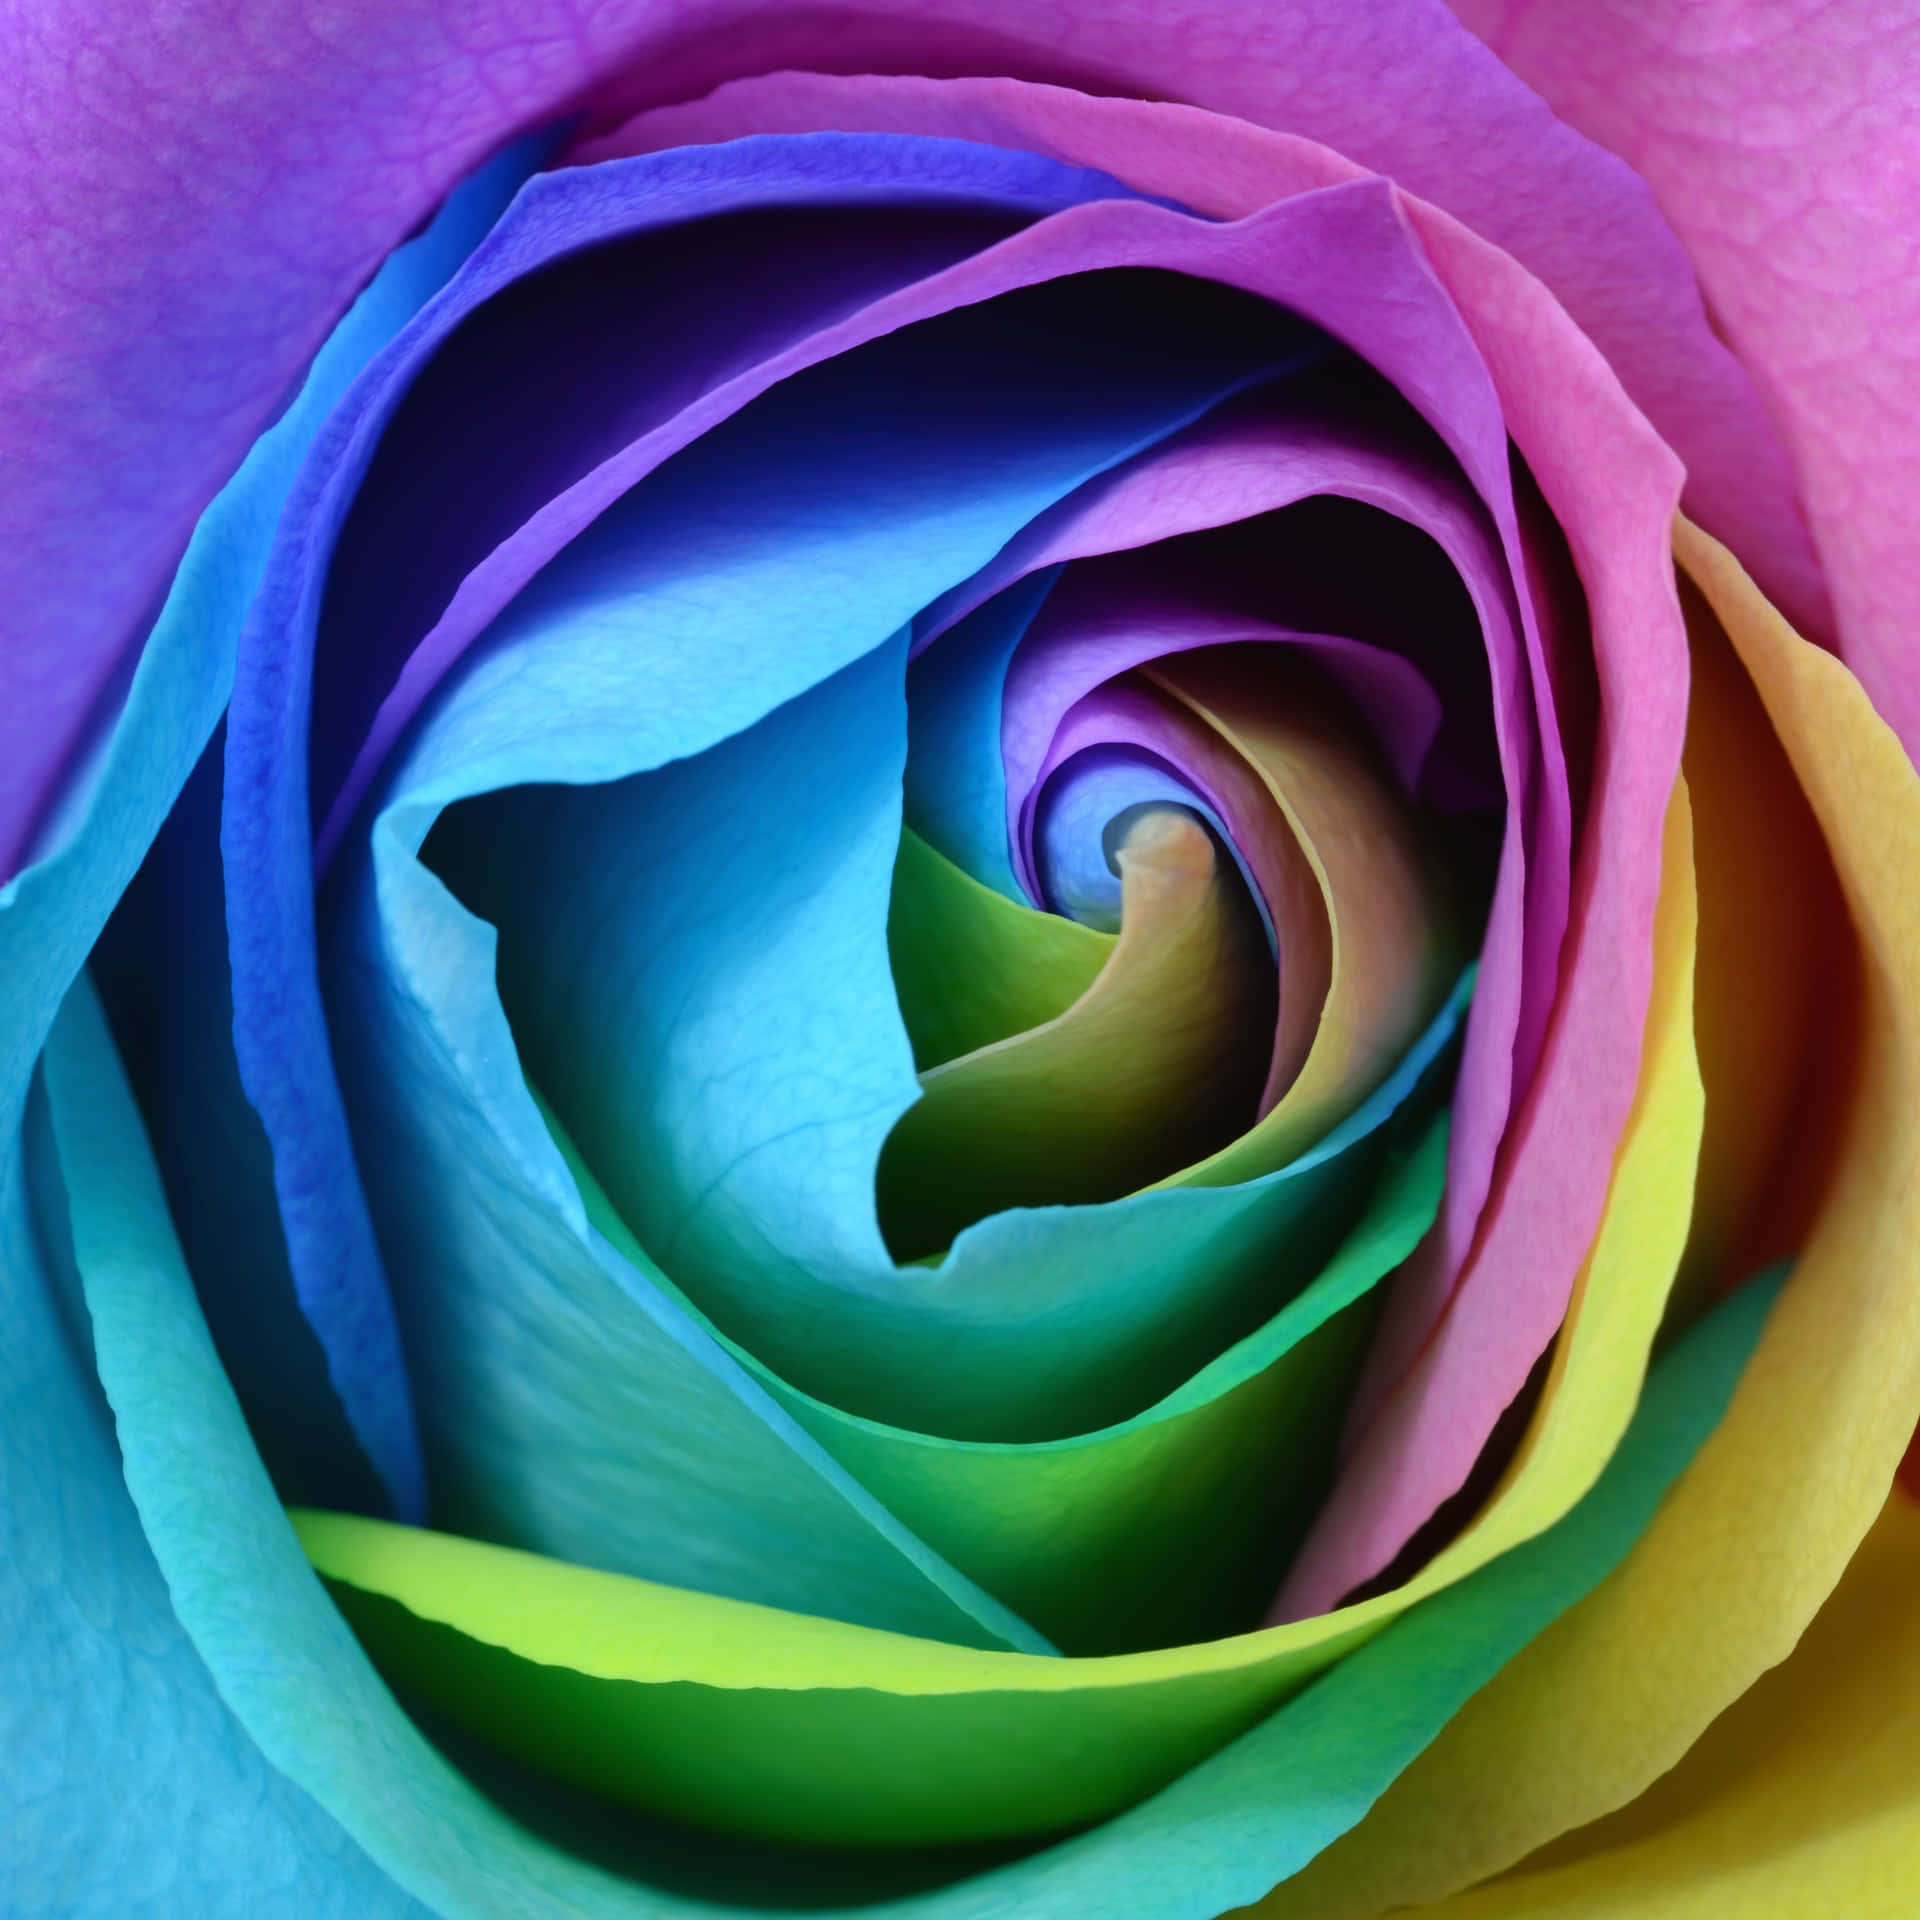 Beautiful Roses Rainbow Flower Digital Art Picture